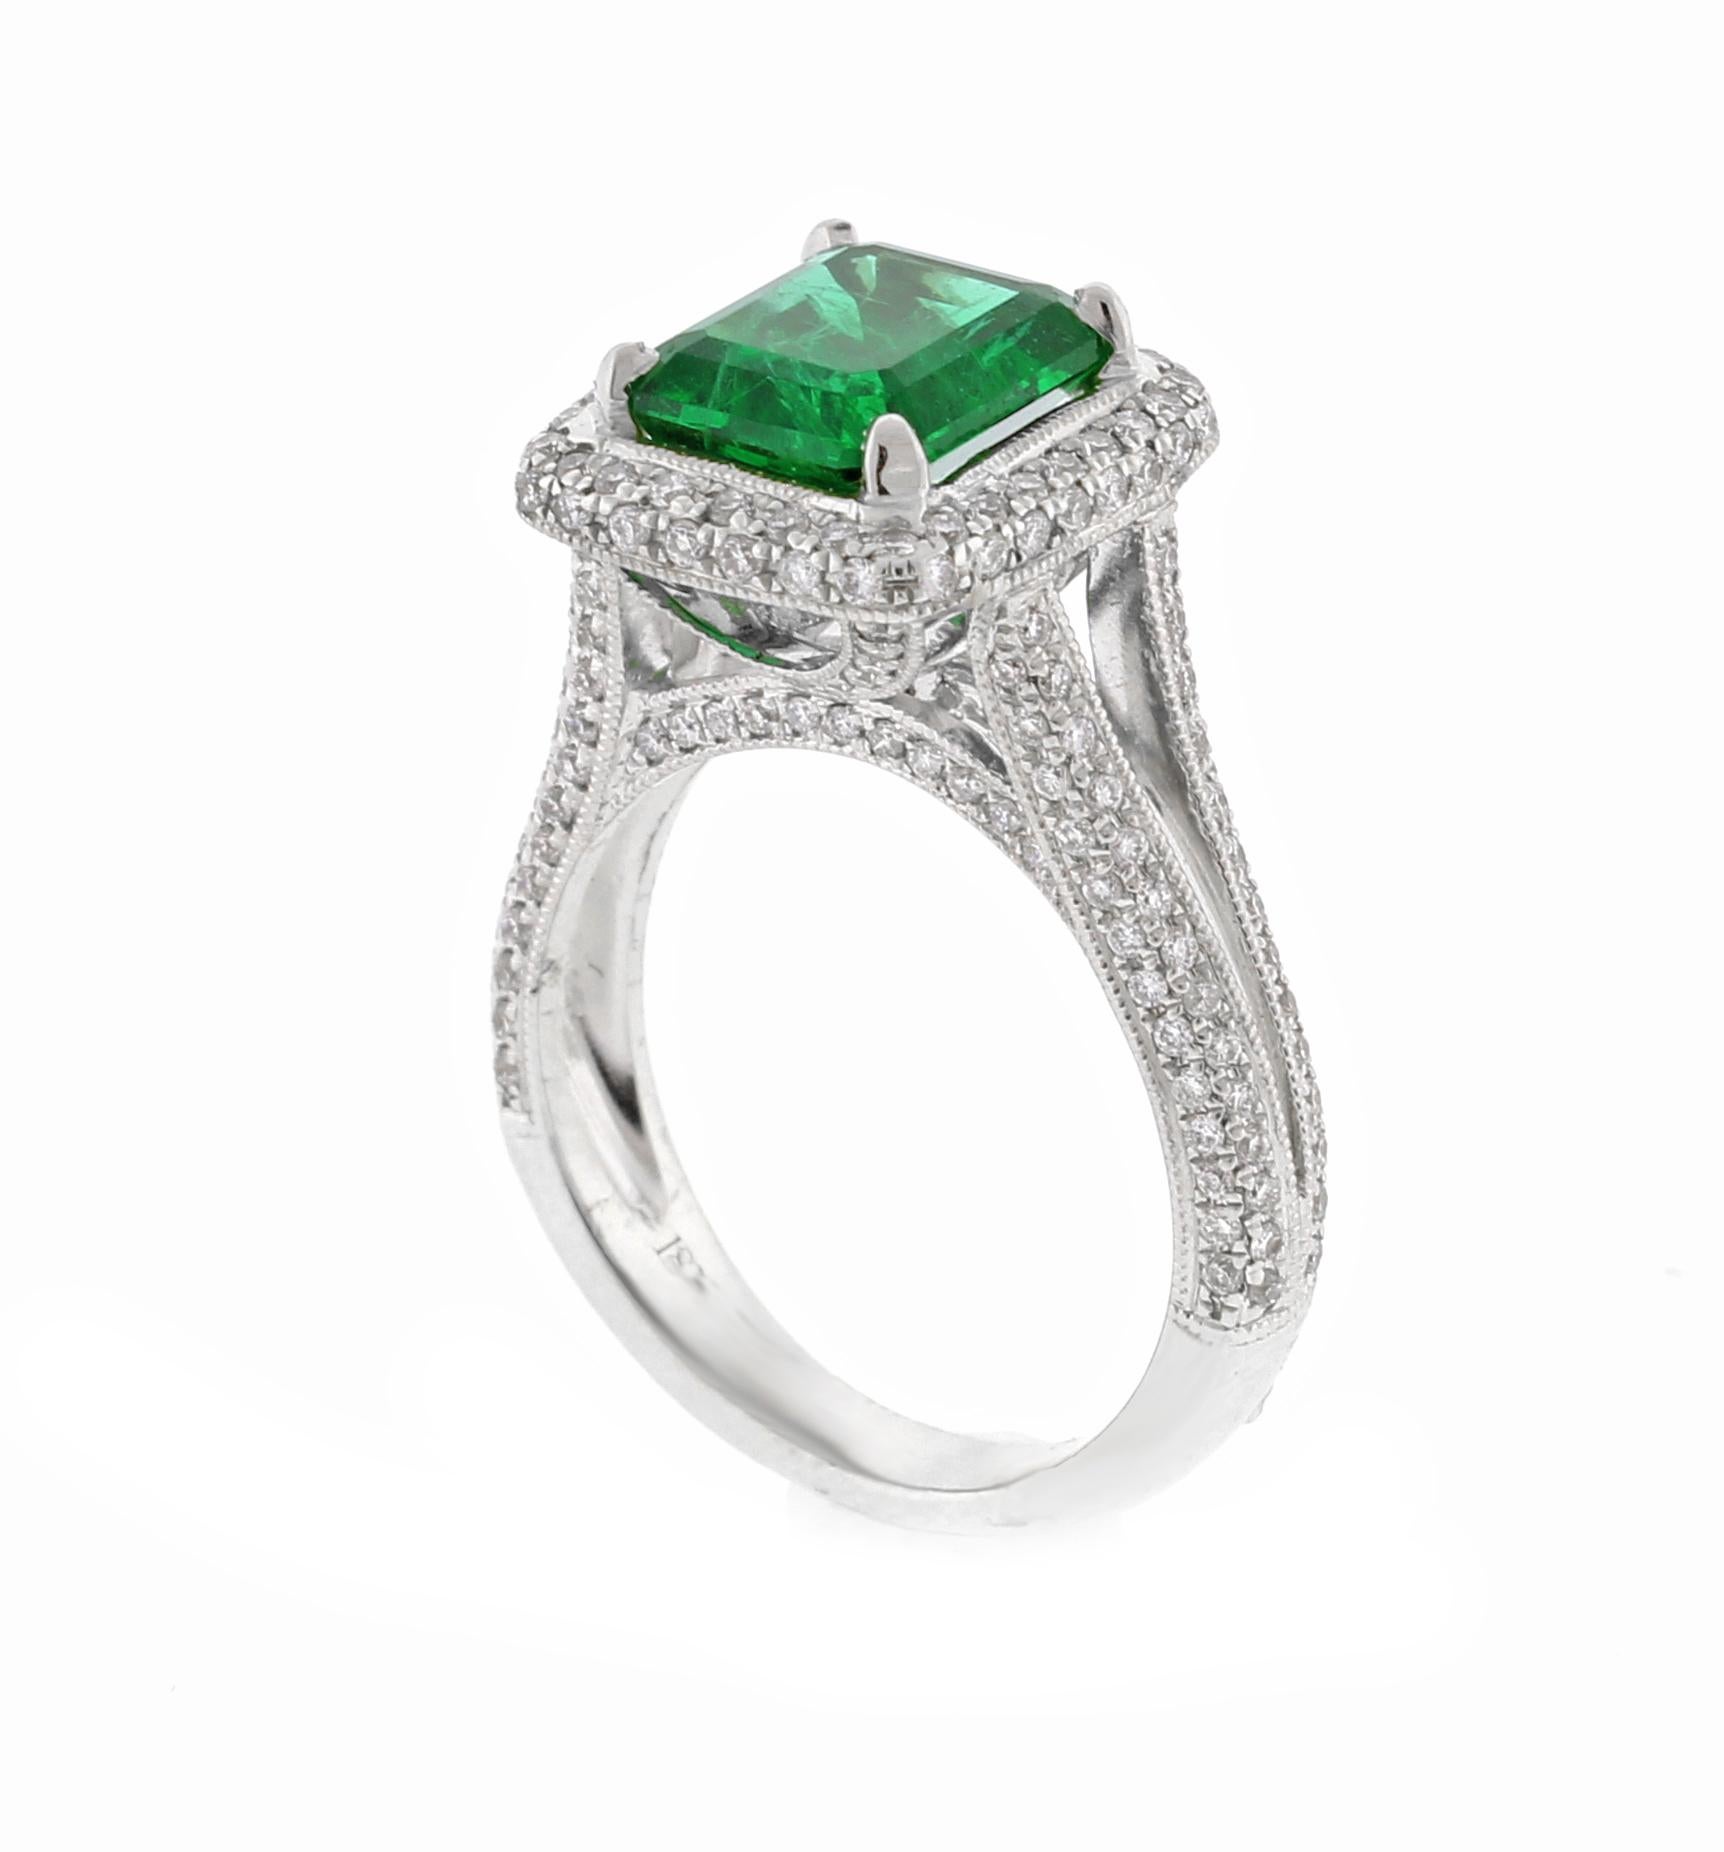 Emerald Cut A.G.L Certified Emerald and Diamond Ring